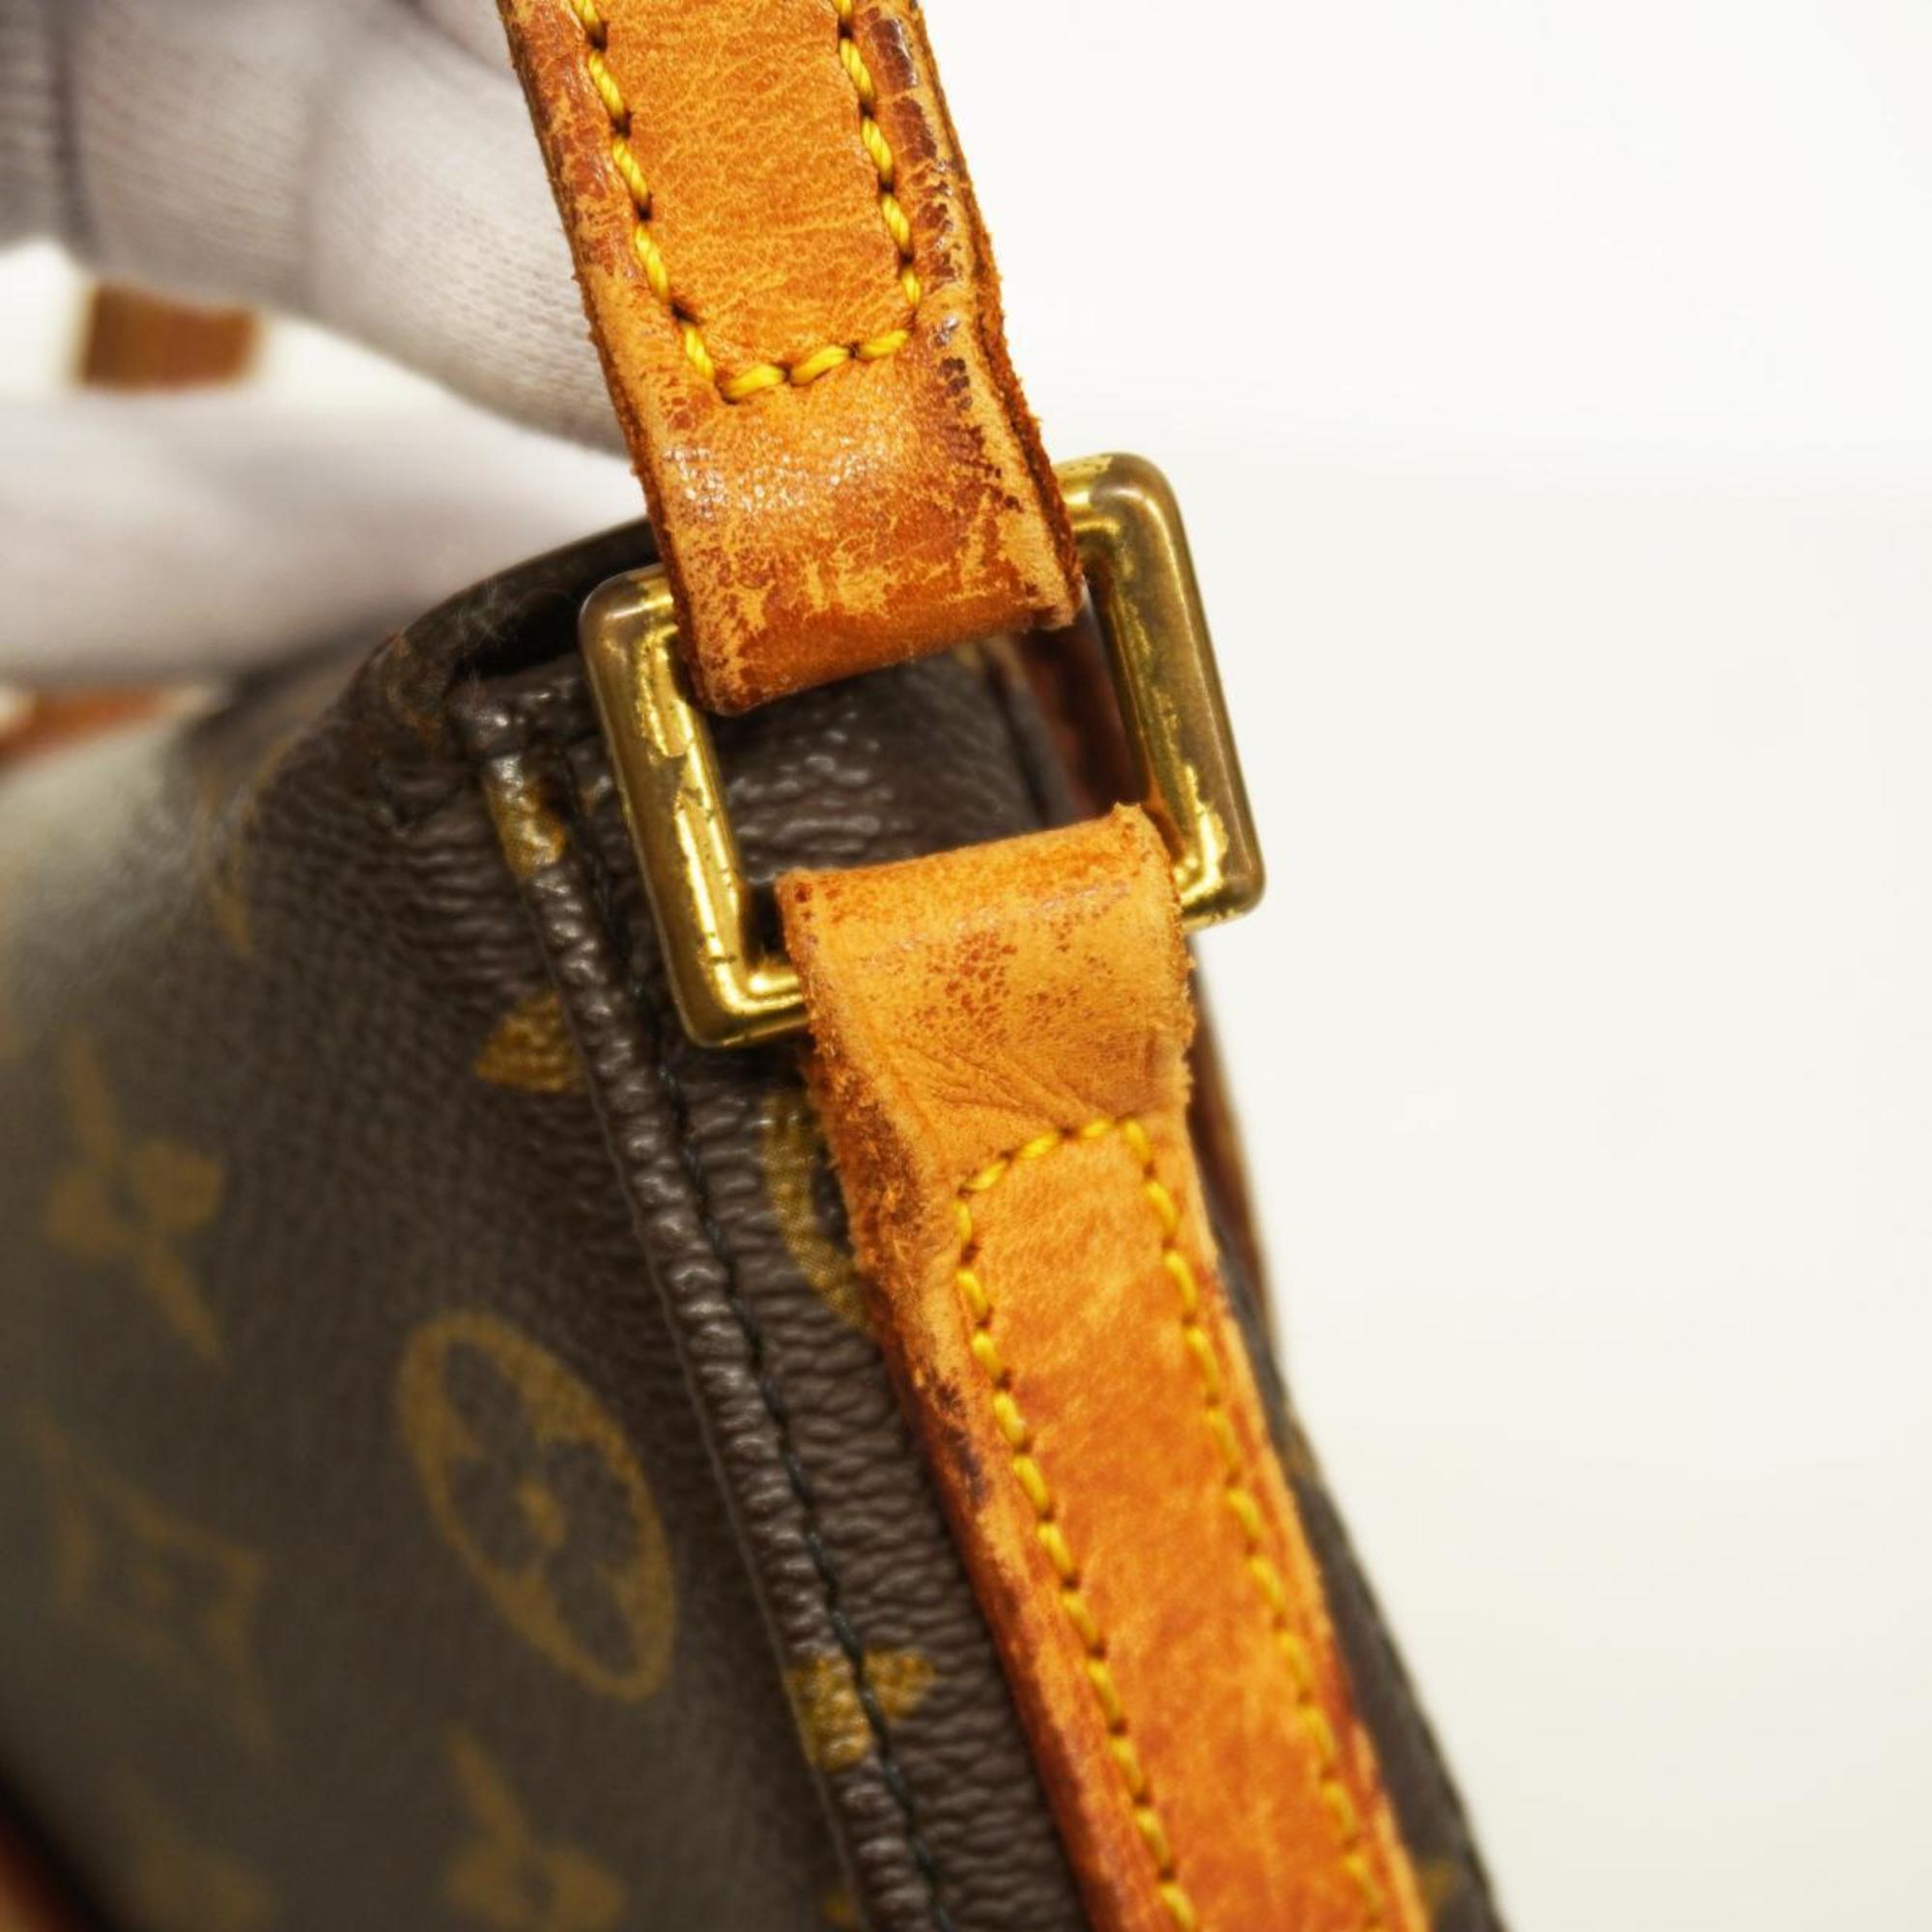 Louis Vuitton Shoulder Bag Monogram Shanti PM M51234 Brown Ladies